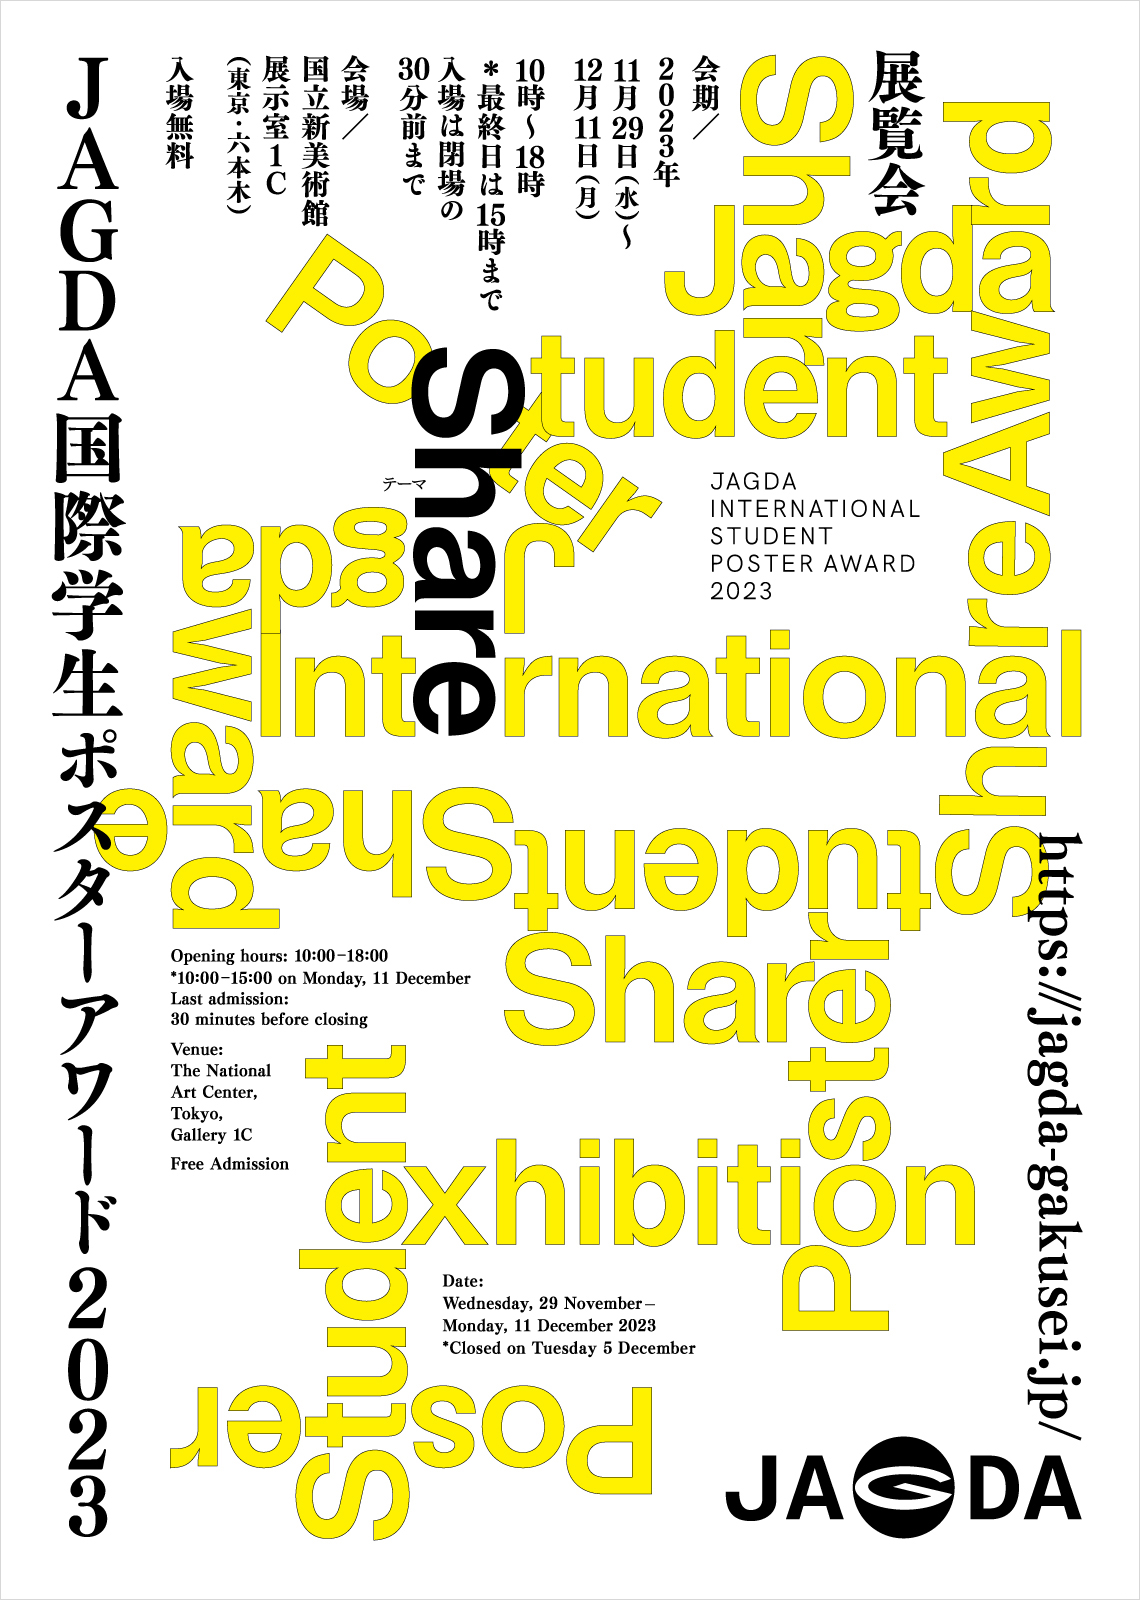 「JAGDA国際学生ポスターアワード2023」の展覧会で「学生クリエイター支援企画」用ポスター販売に協力